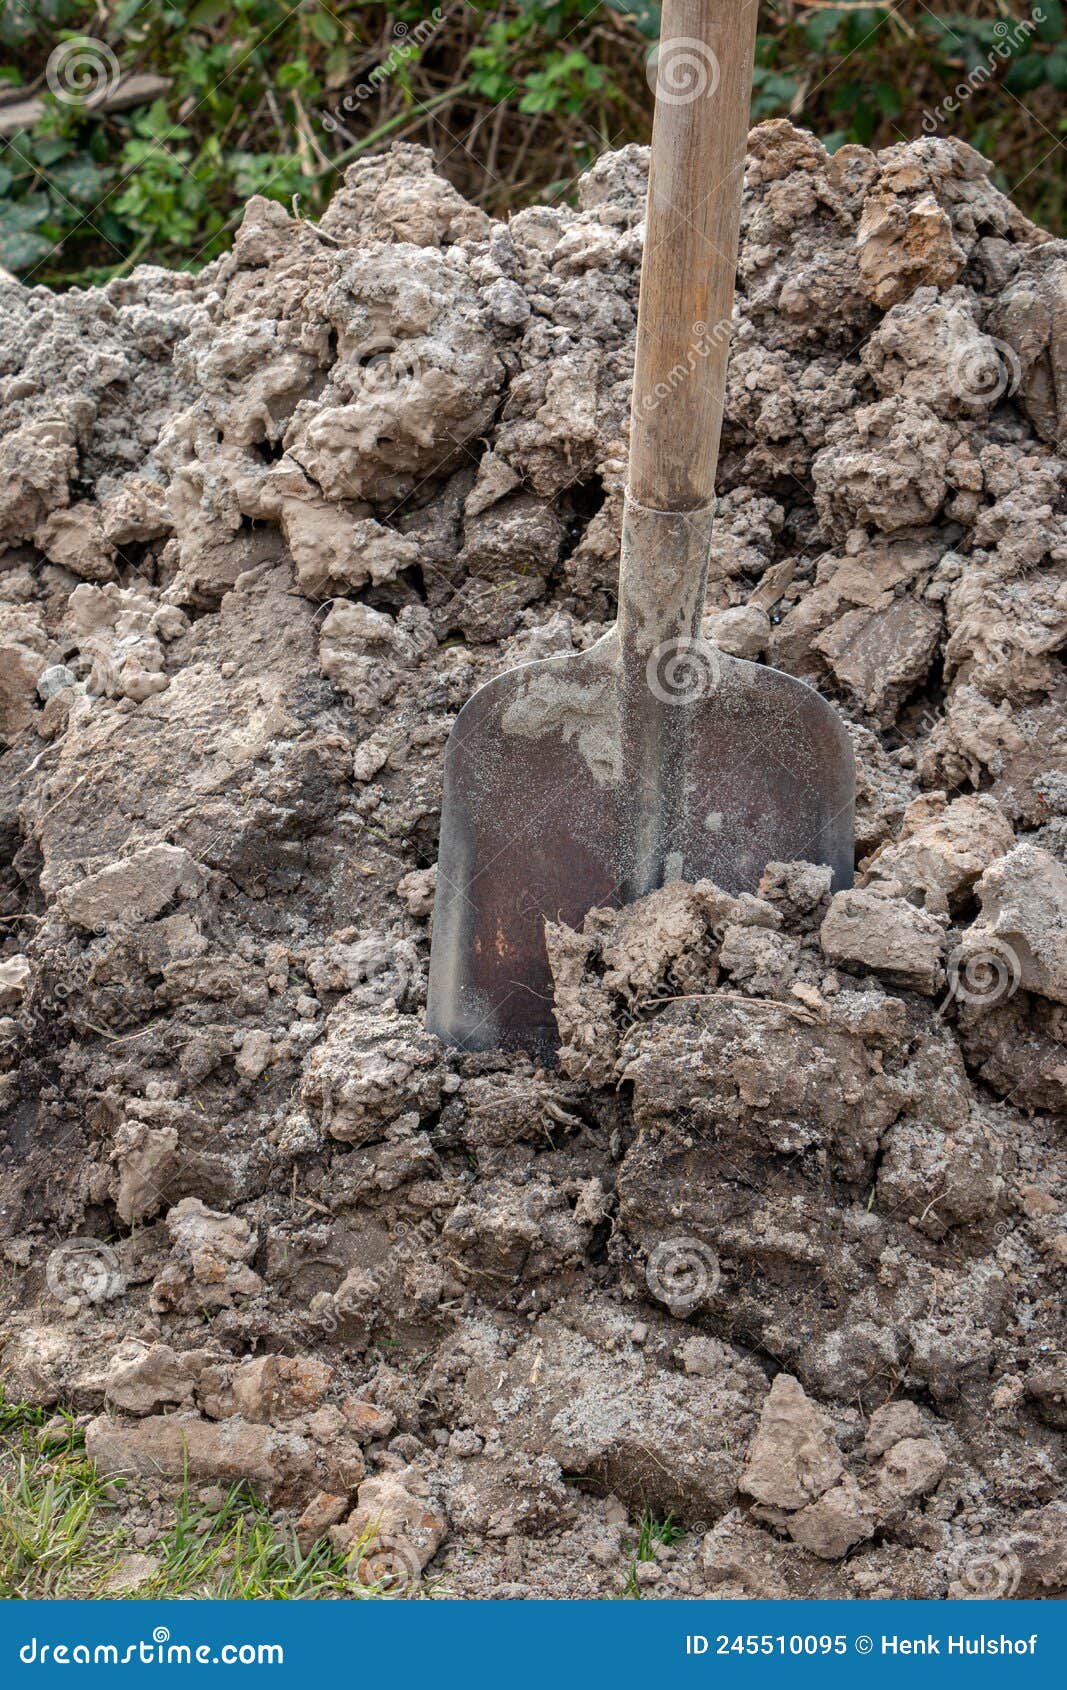 Premium Photo  Edible brown clay stone with small garden shovels